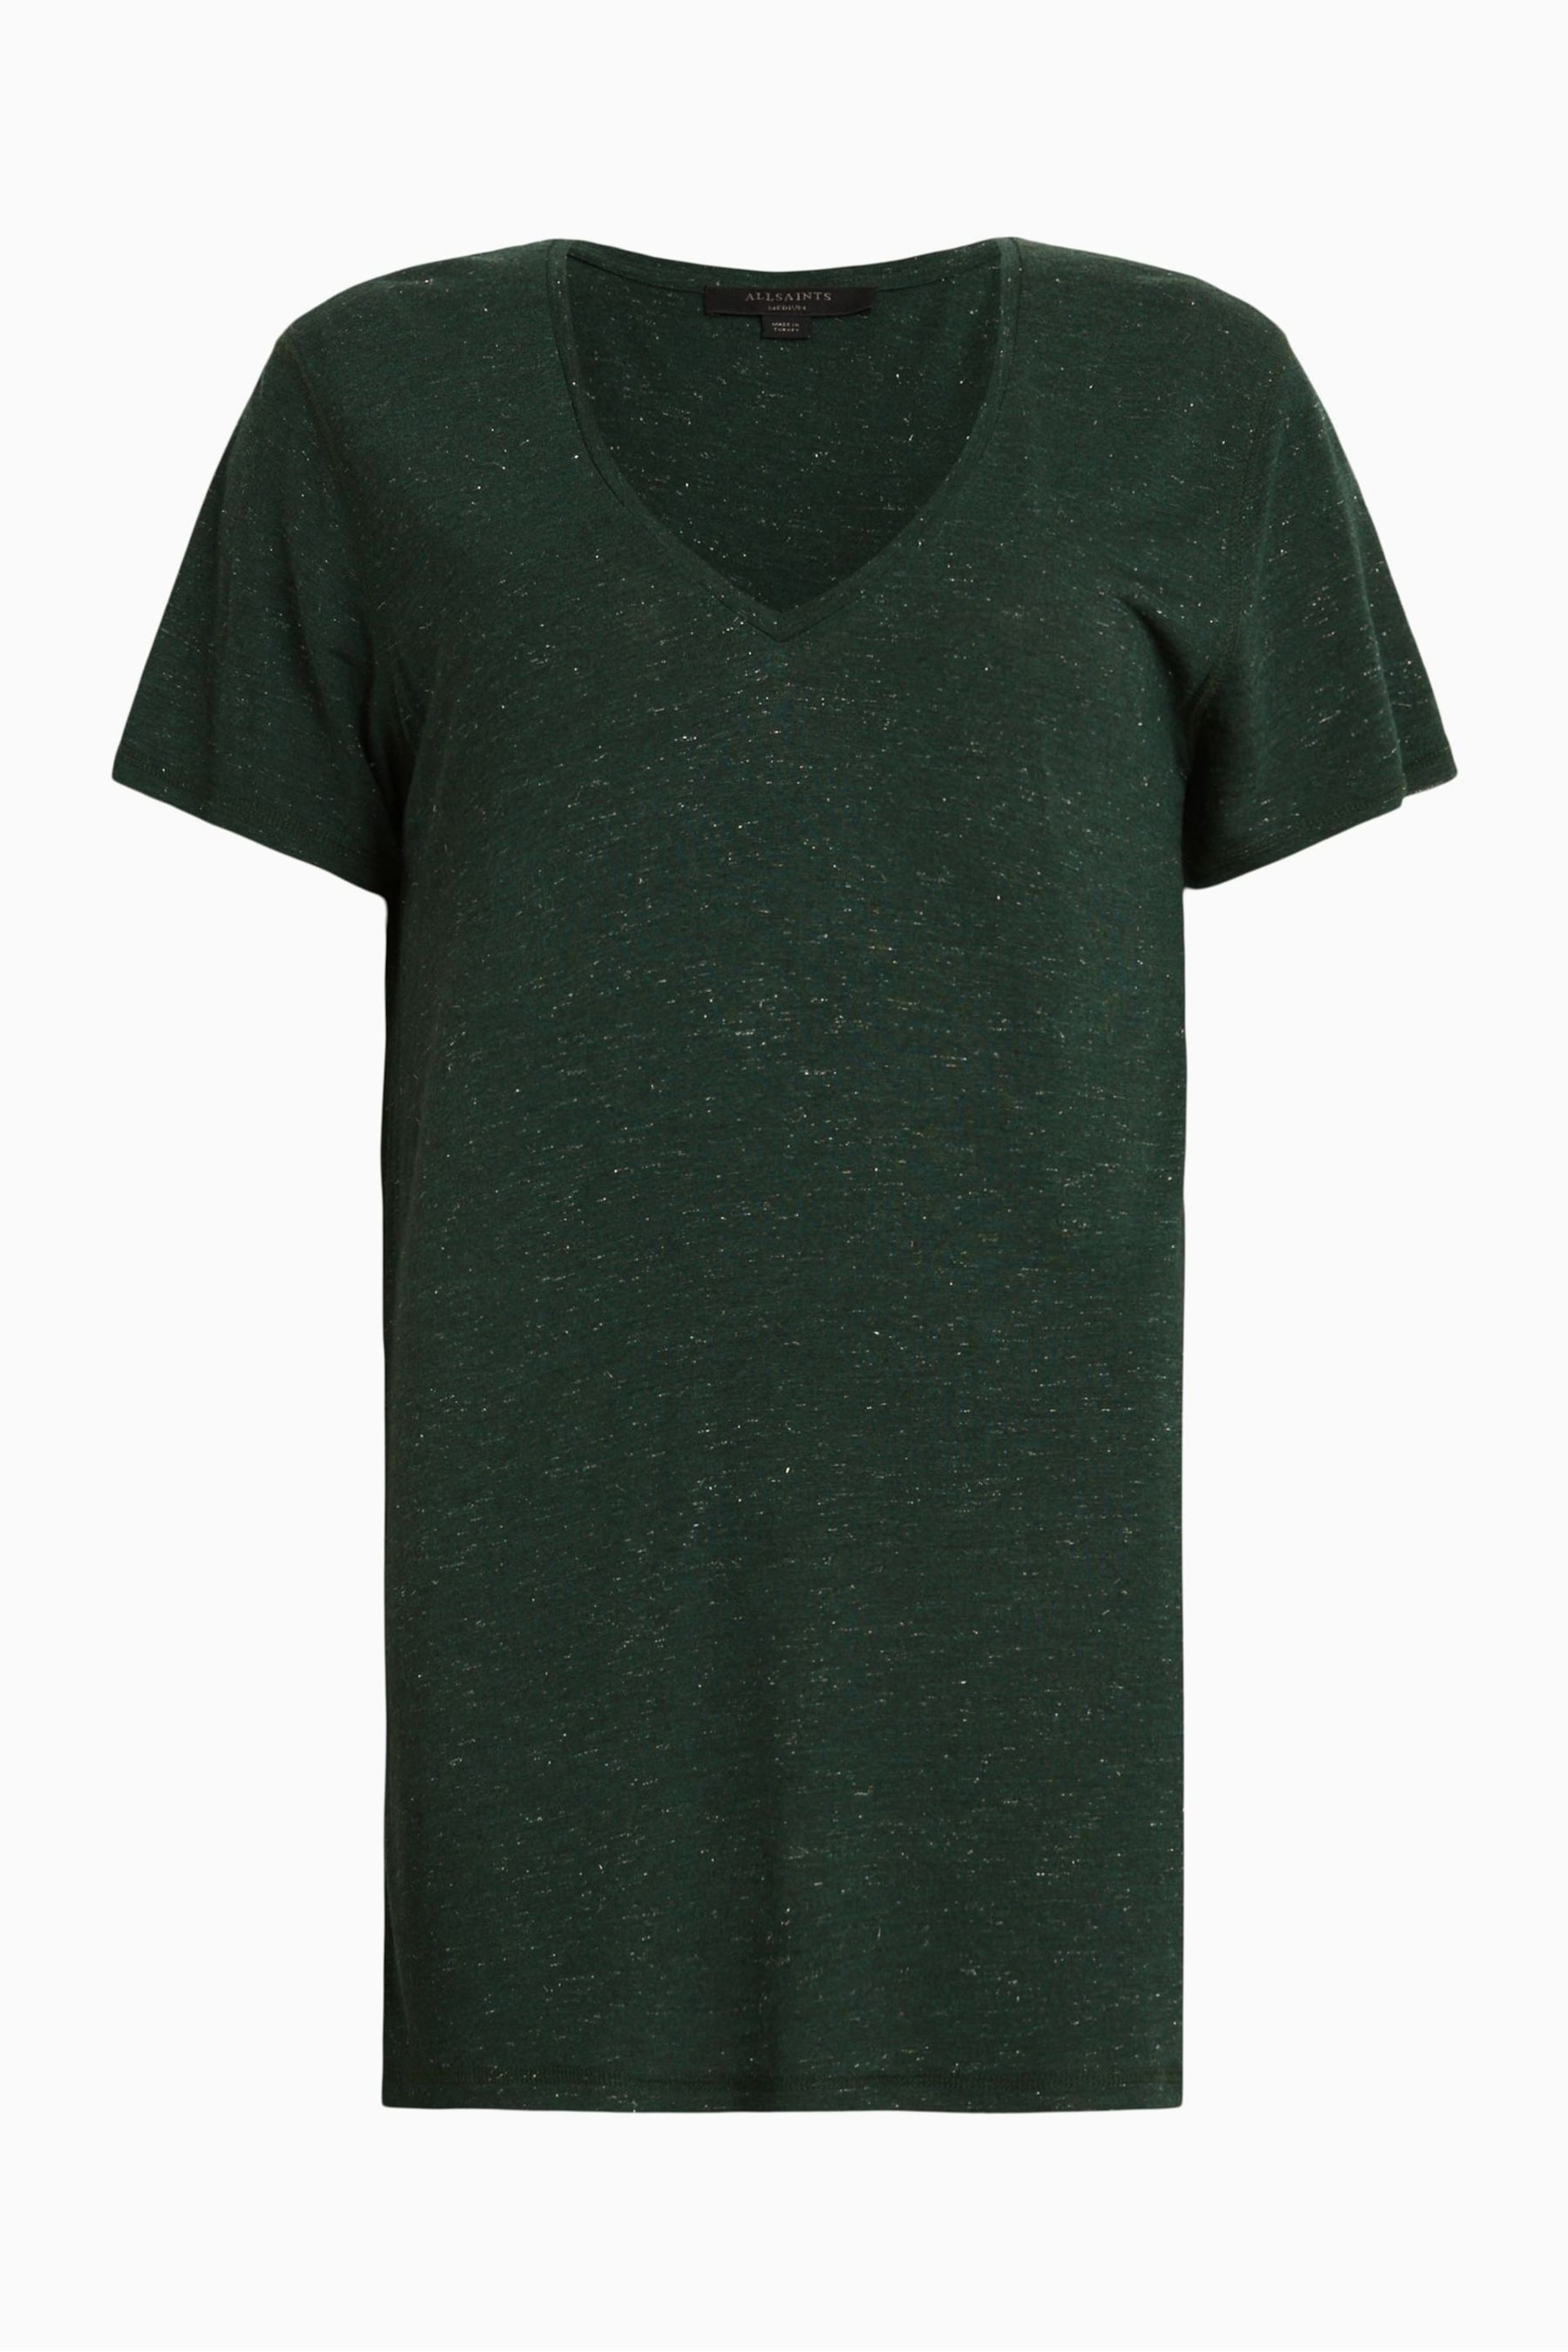 AllSaints Green Emelyn Shimmer T-Shirt - Image 6 of 6